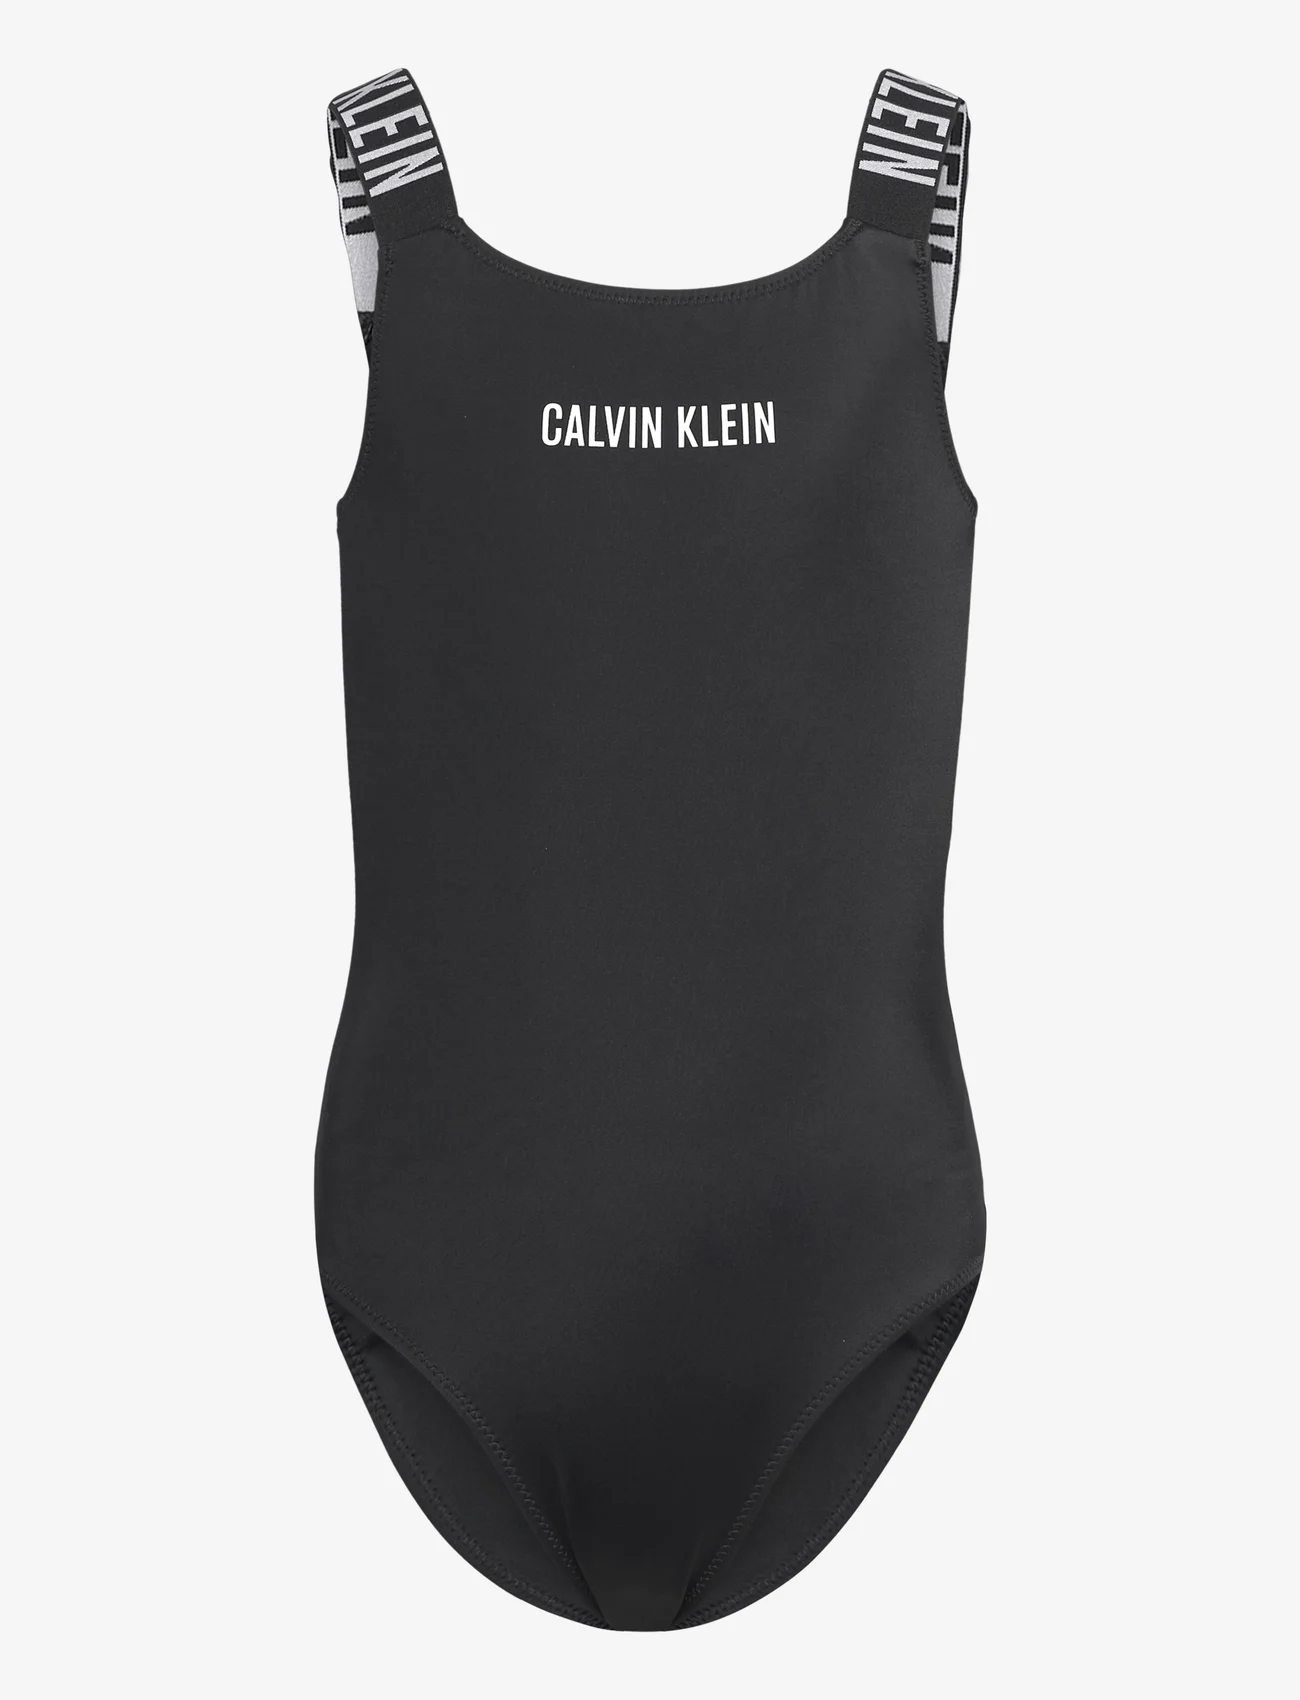 Descubrir 46+ imagen swimsuits calvin klein - Thptnganamst.edu.vn